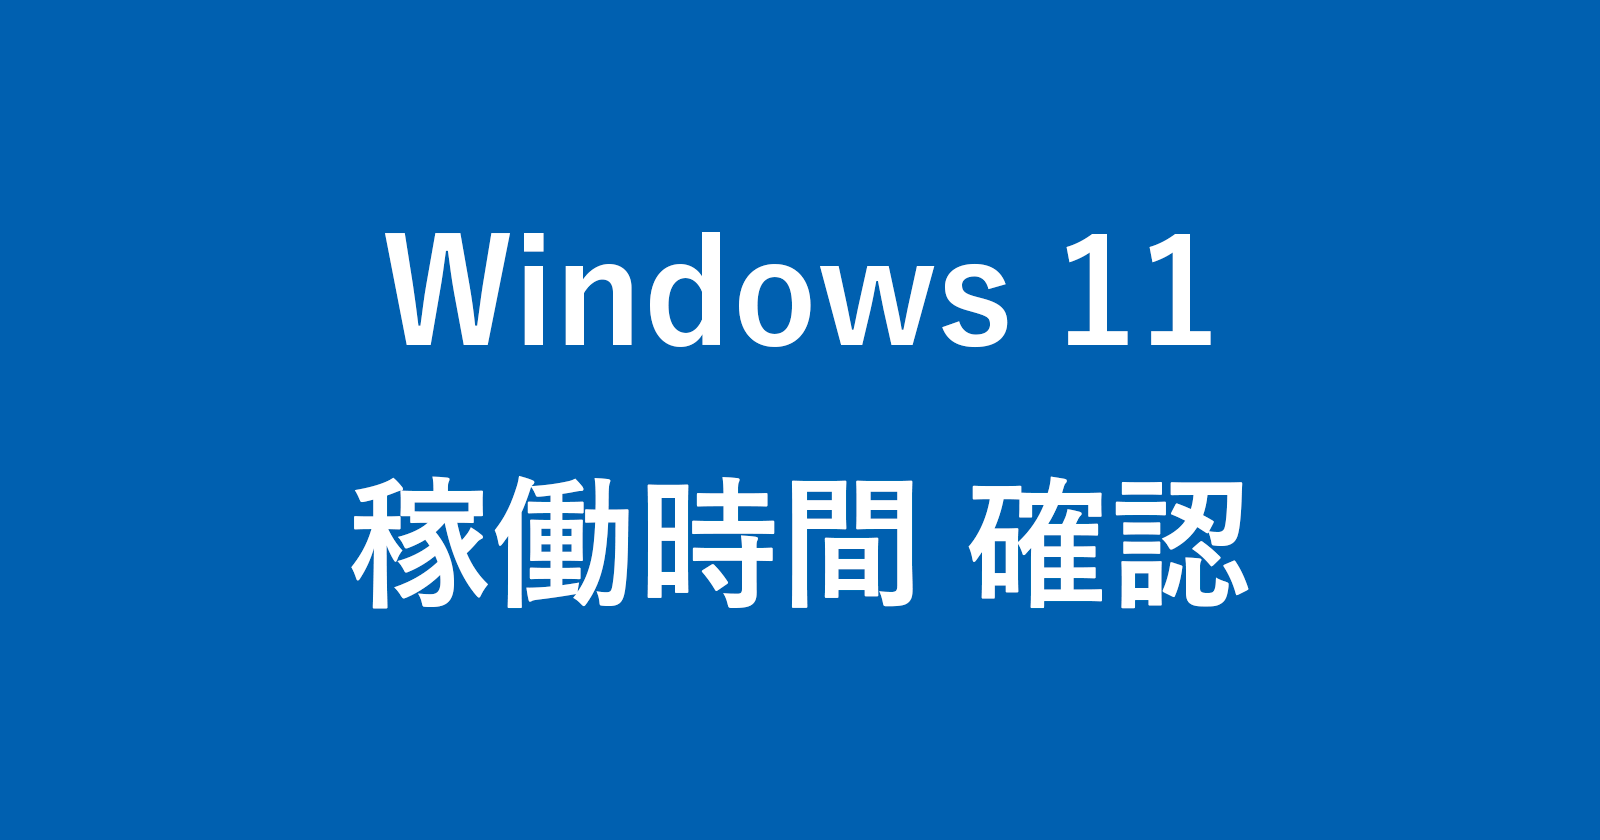 windows 11 uptime